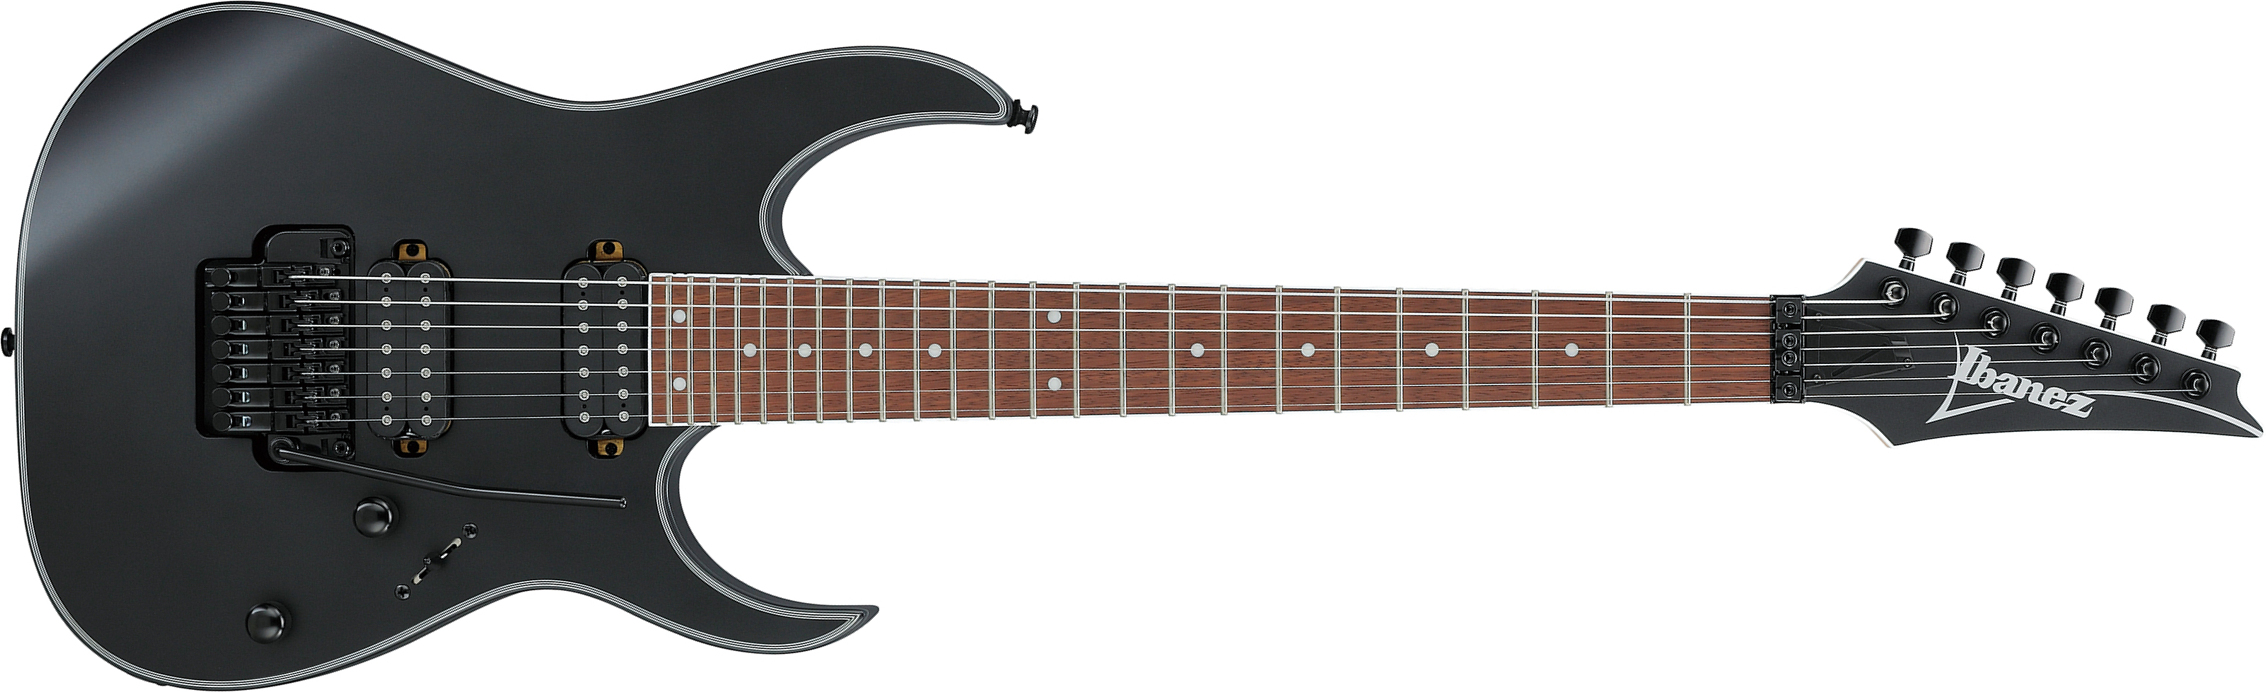 Ibanez Rg7320ex Bkf 7c 2h Fr Jat - Black Flat - 7 string electric guitar - Main picture